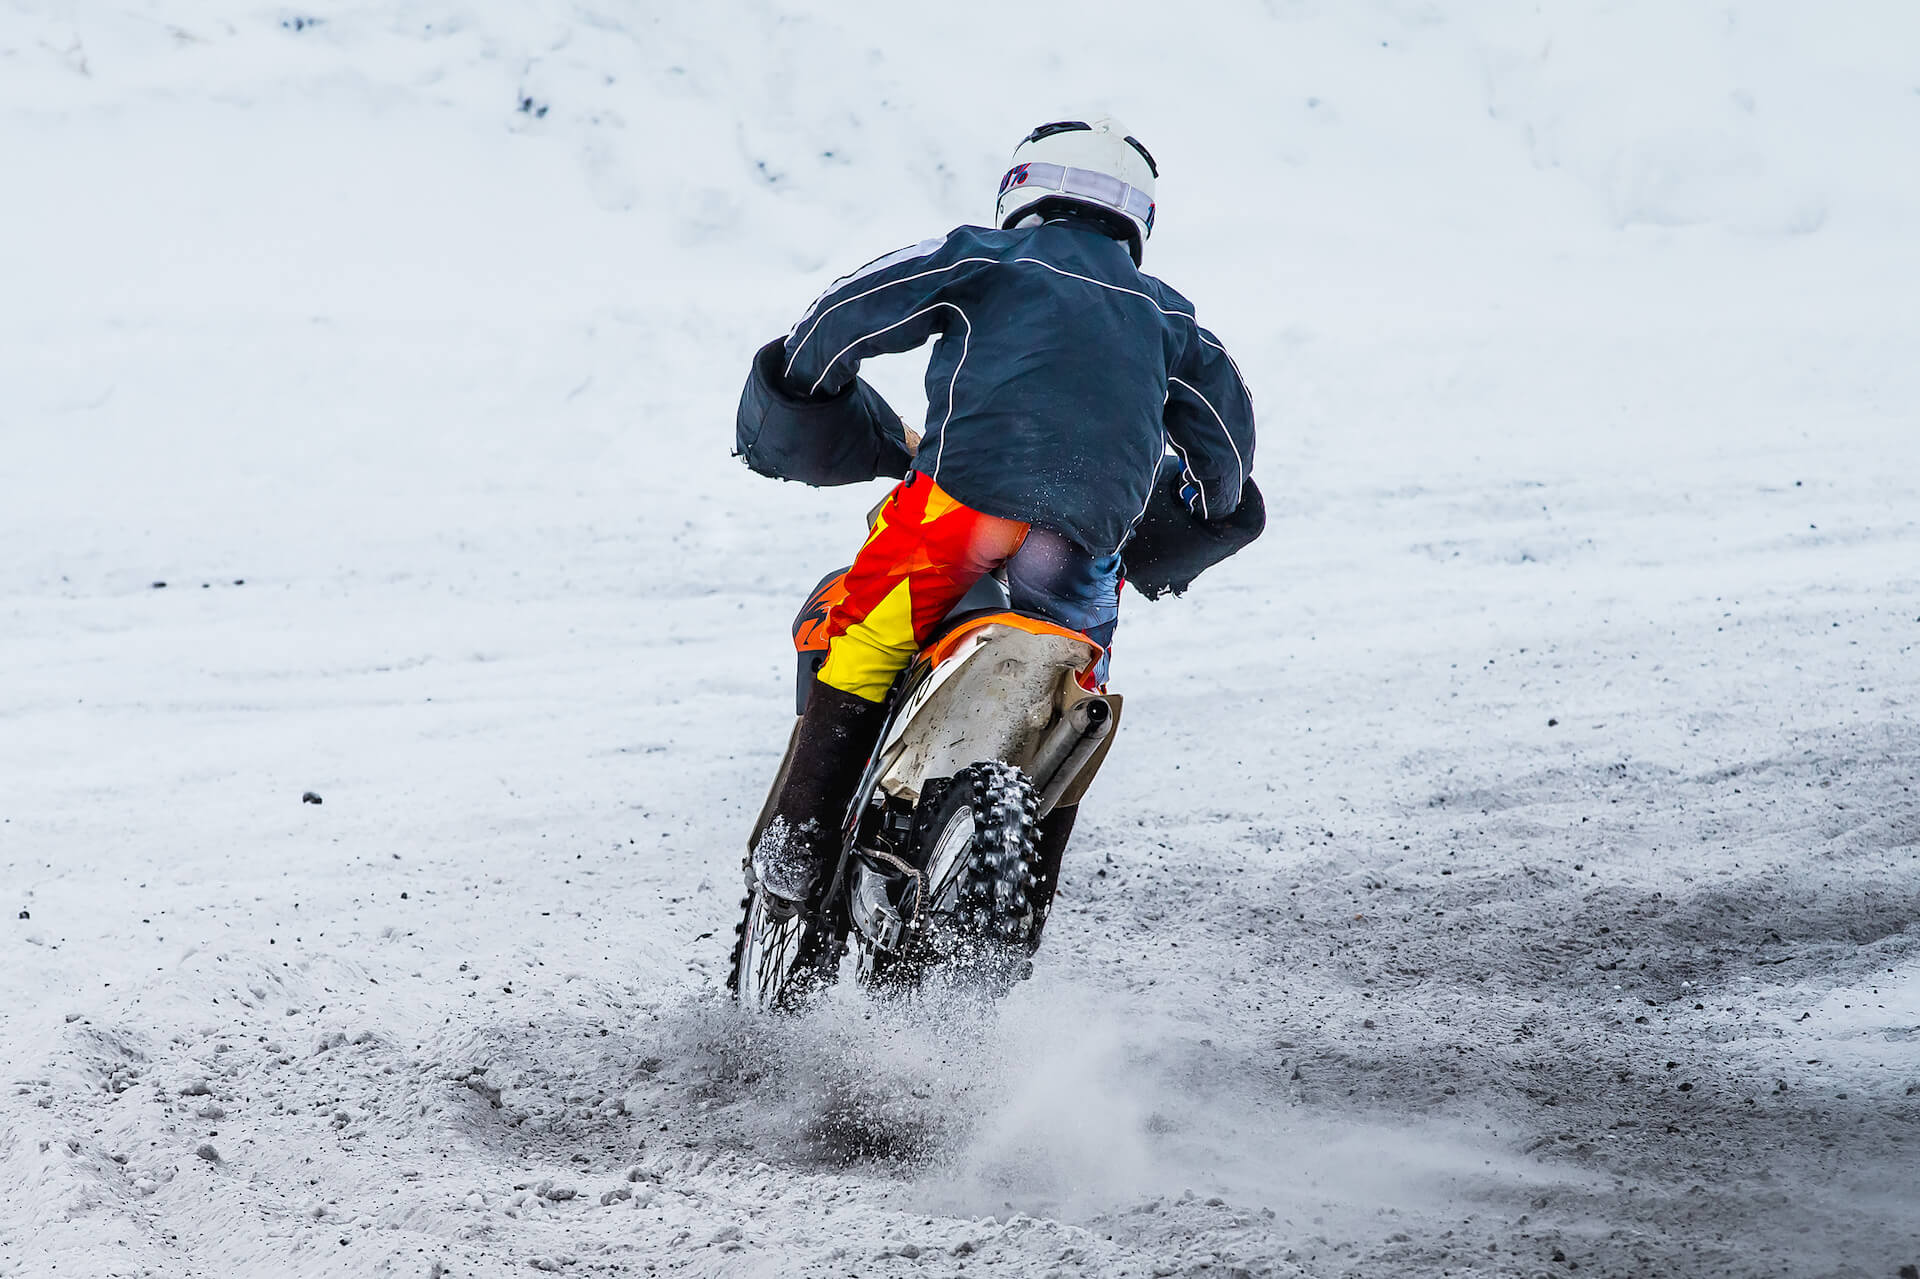 racer-motorcycle-race-in-winter-2021-08-26-15-33-11-utc.jpg